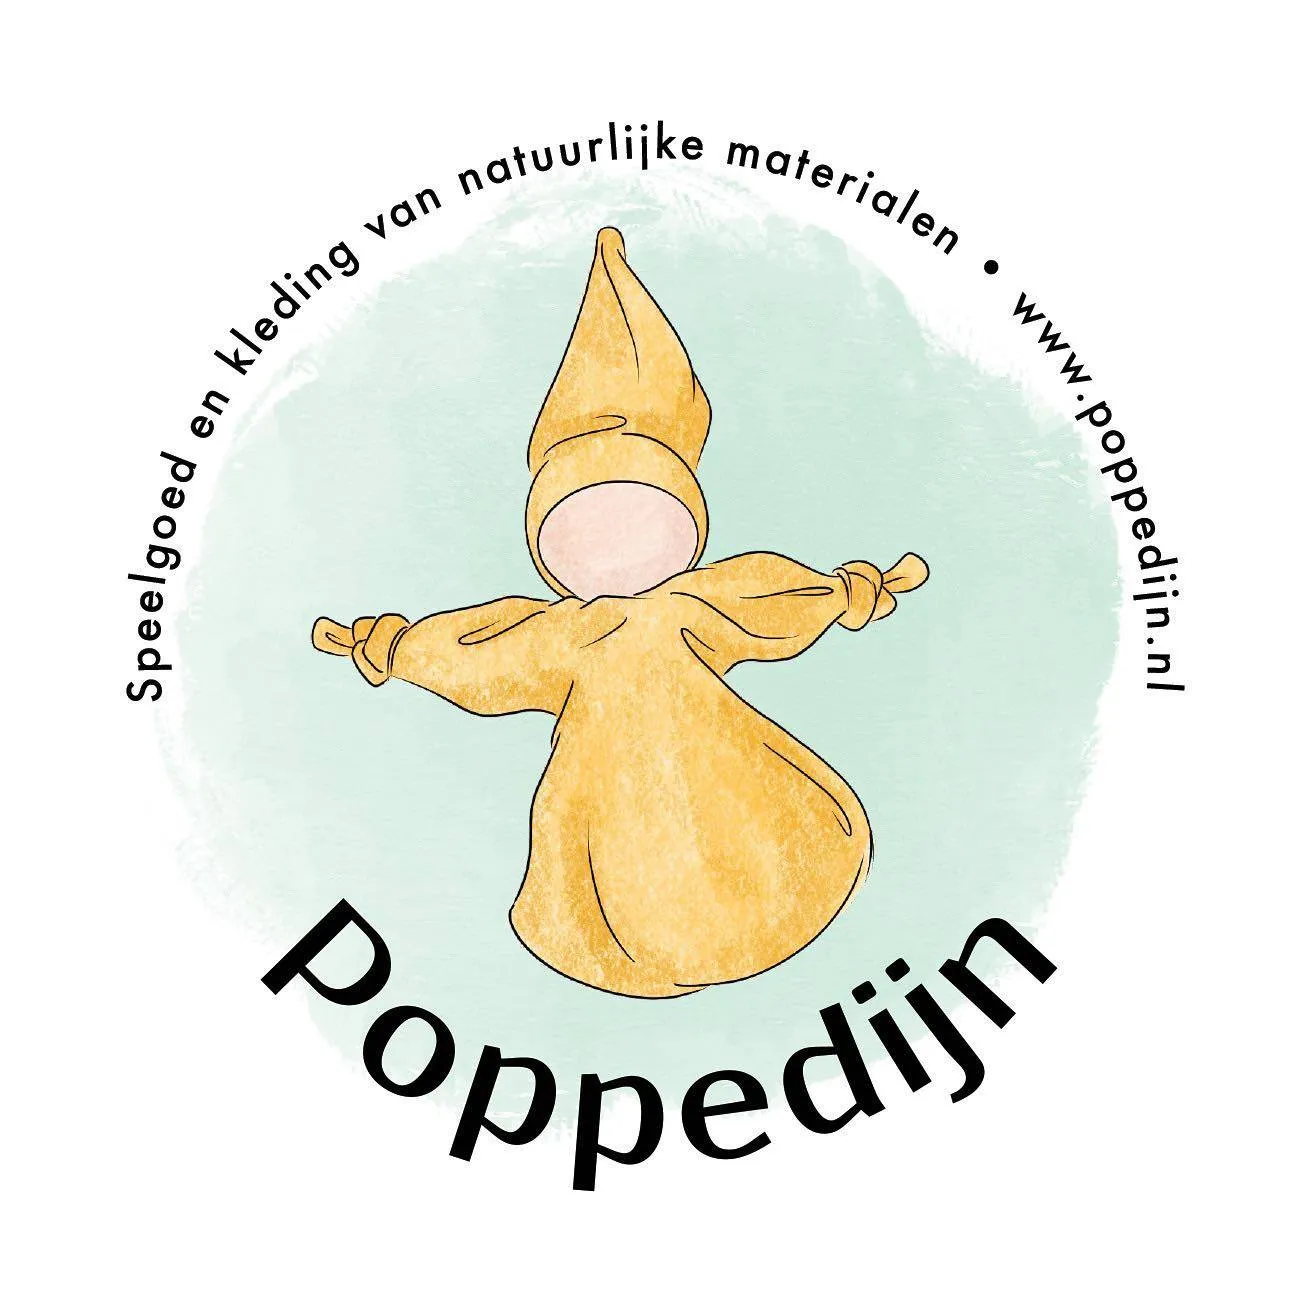 poppedijn.nl